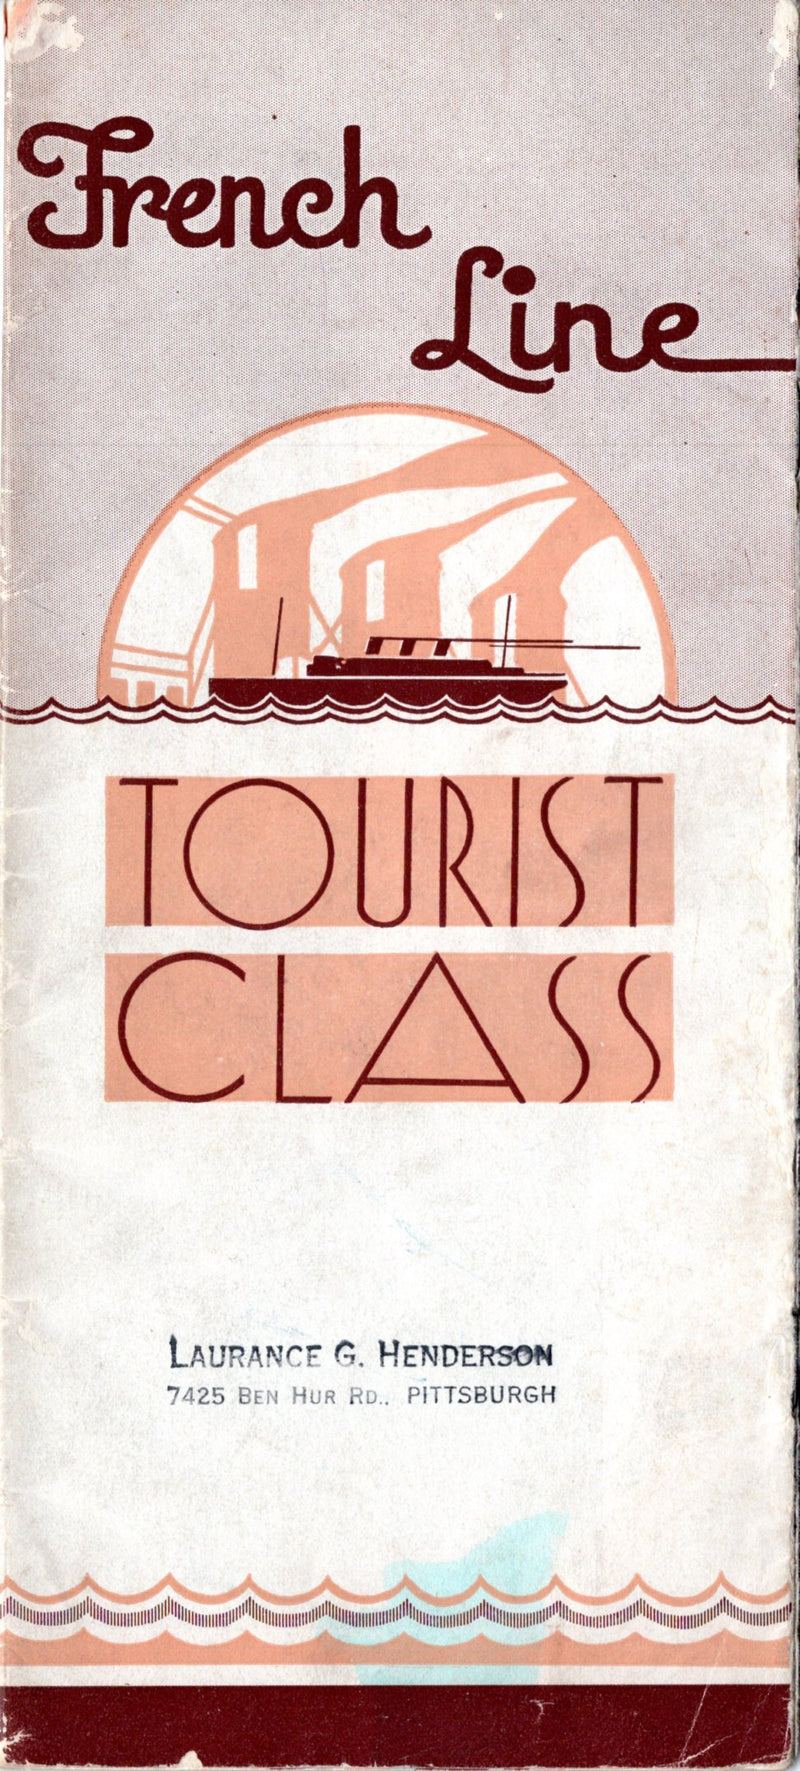 Various: pre-war - 1932 French Line Tourist Class interiors brochure